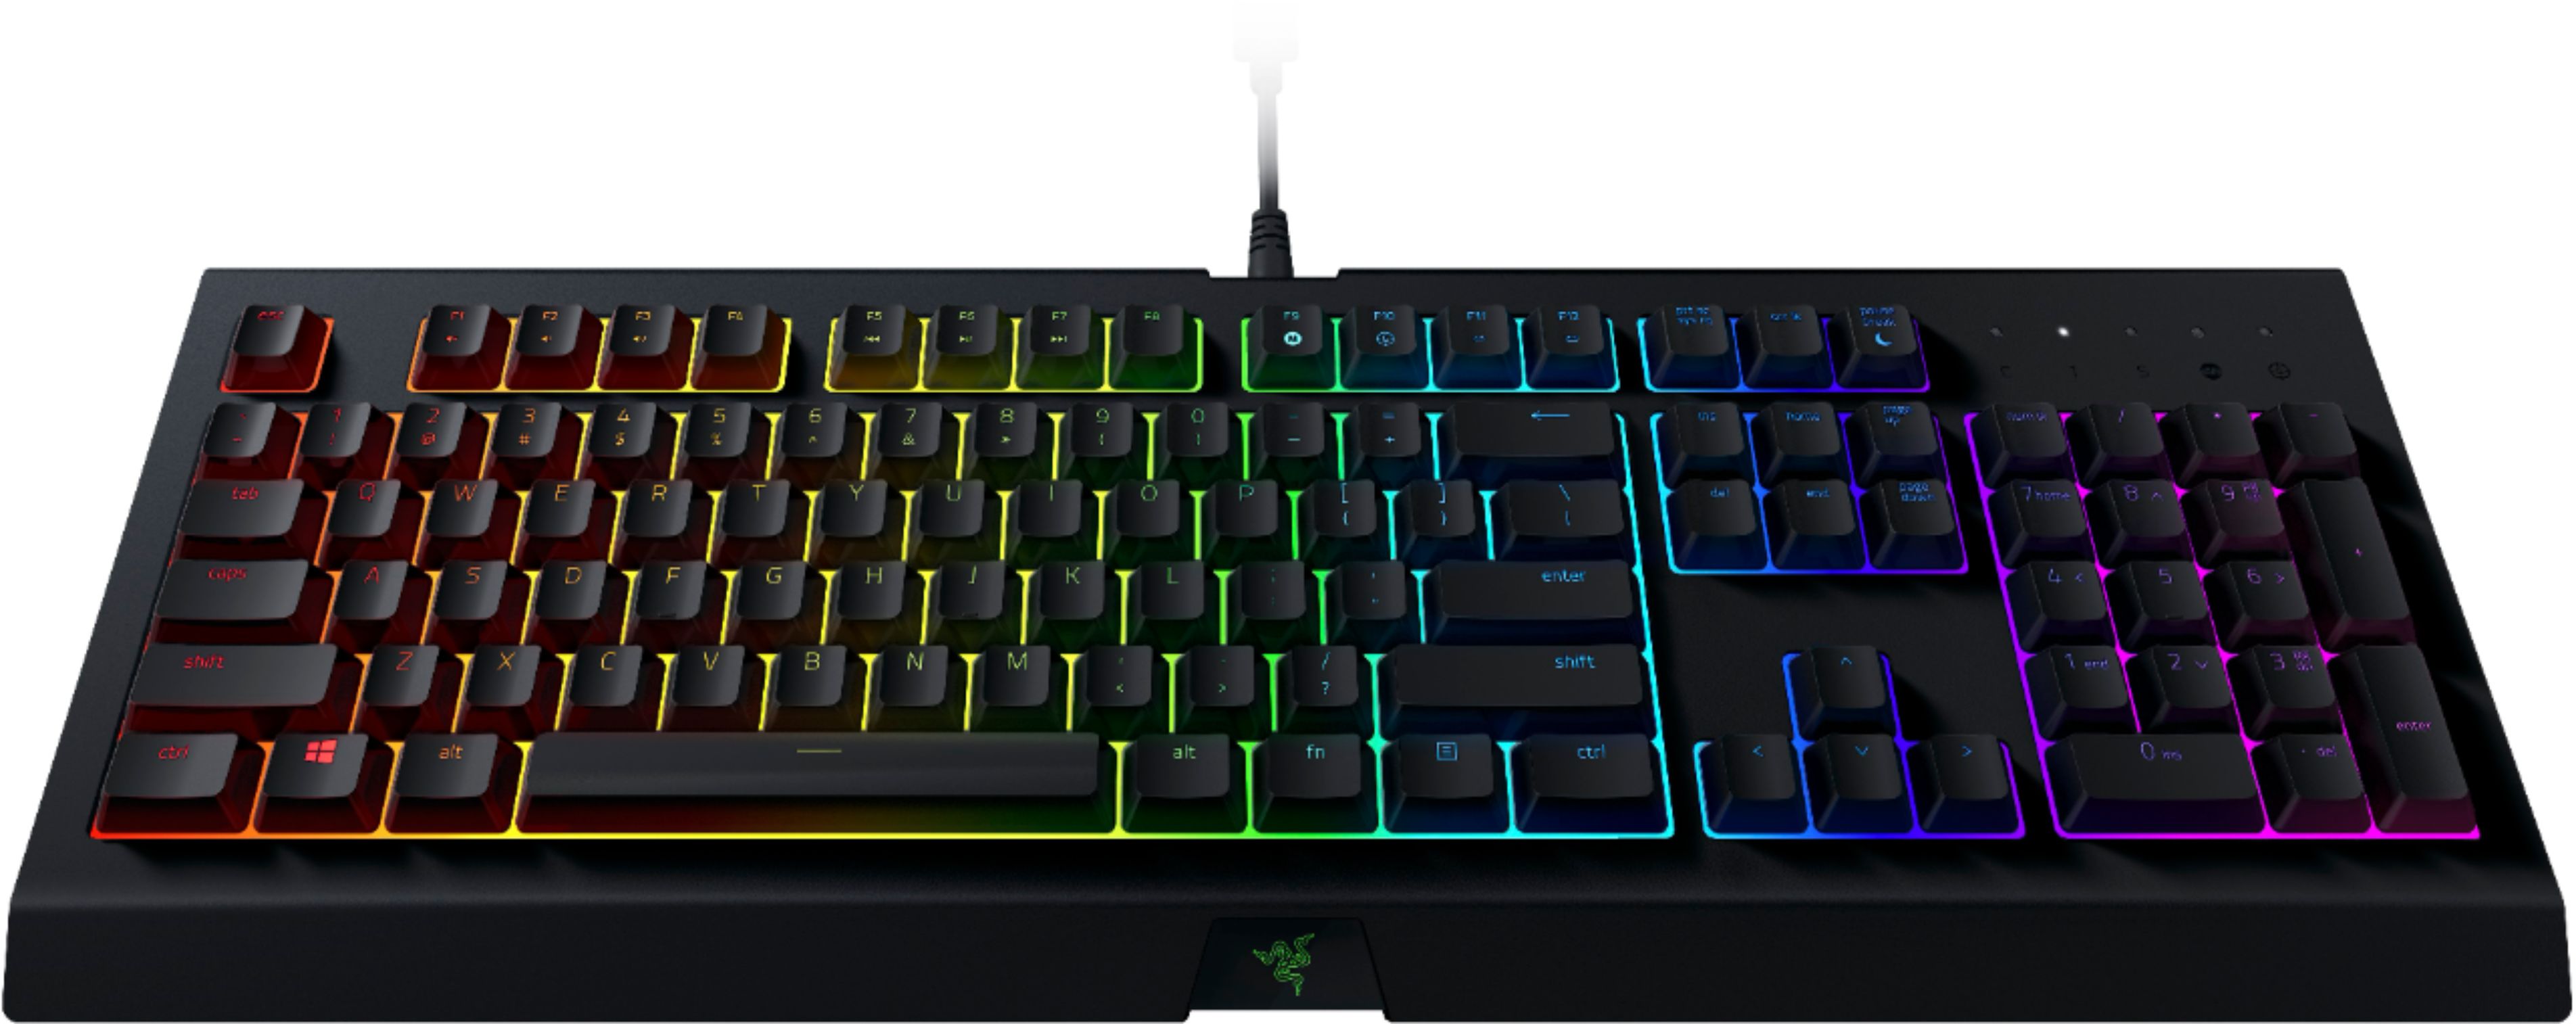 ... Razer Cynosa Chroma Wired Gaming Membrane Keyboard with RGB Back Lighting 